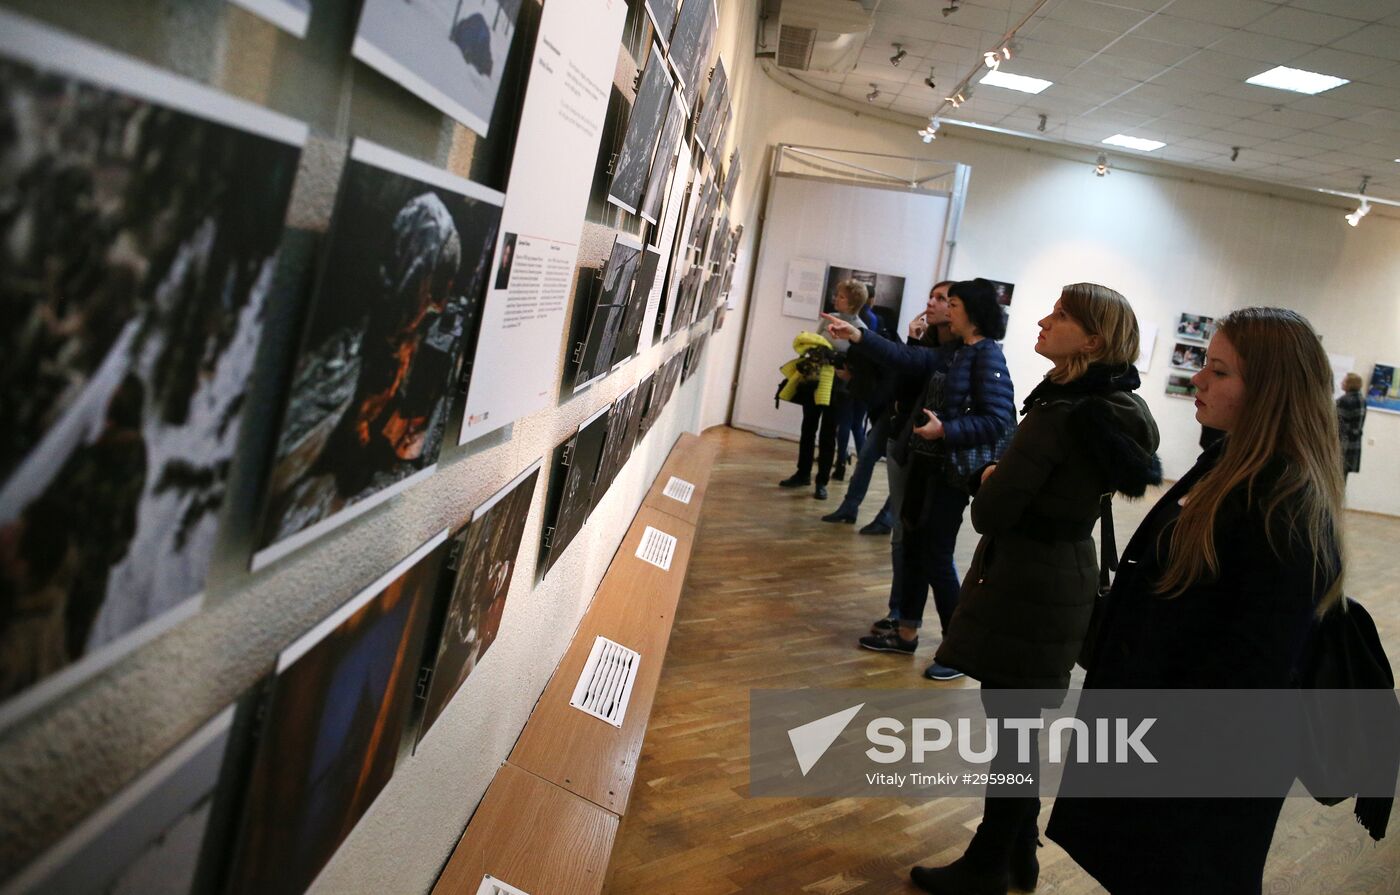 Exhibition of the winners of the Andrei Stenin International Press Photo Contest in Krasnodar